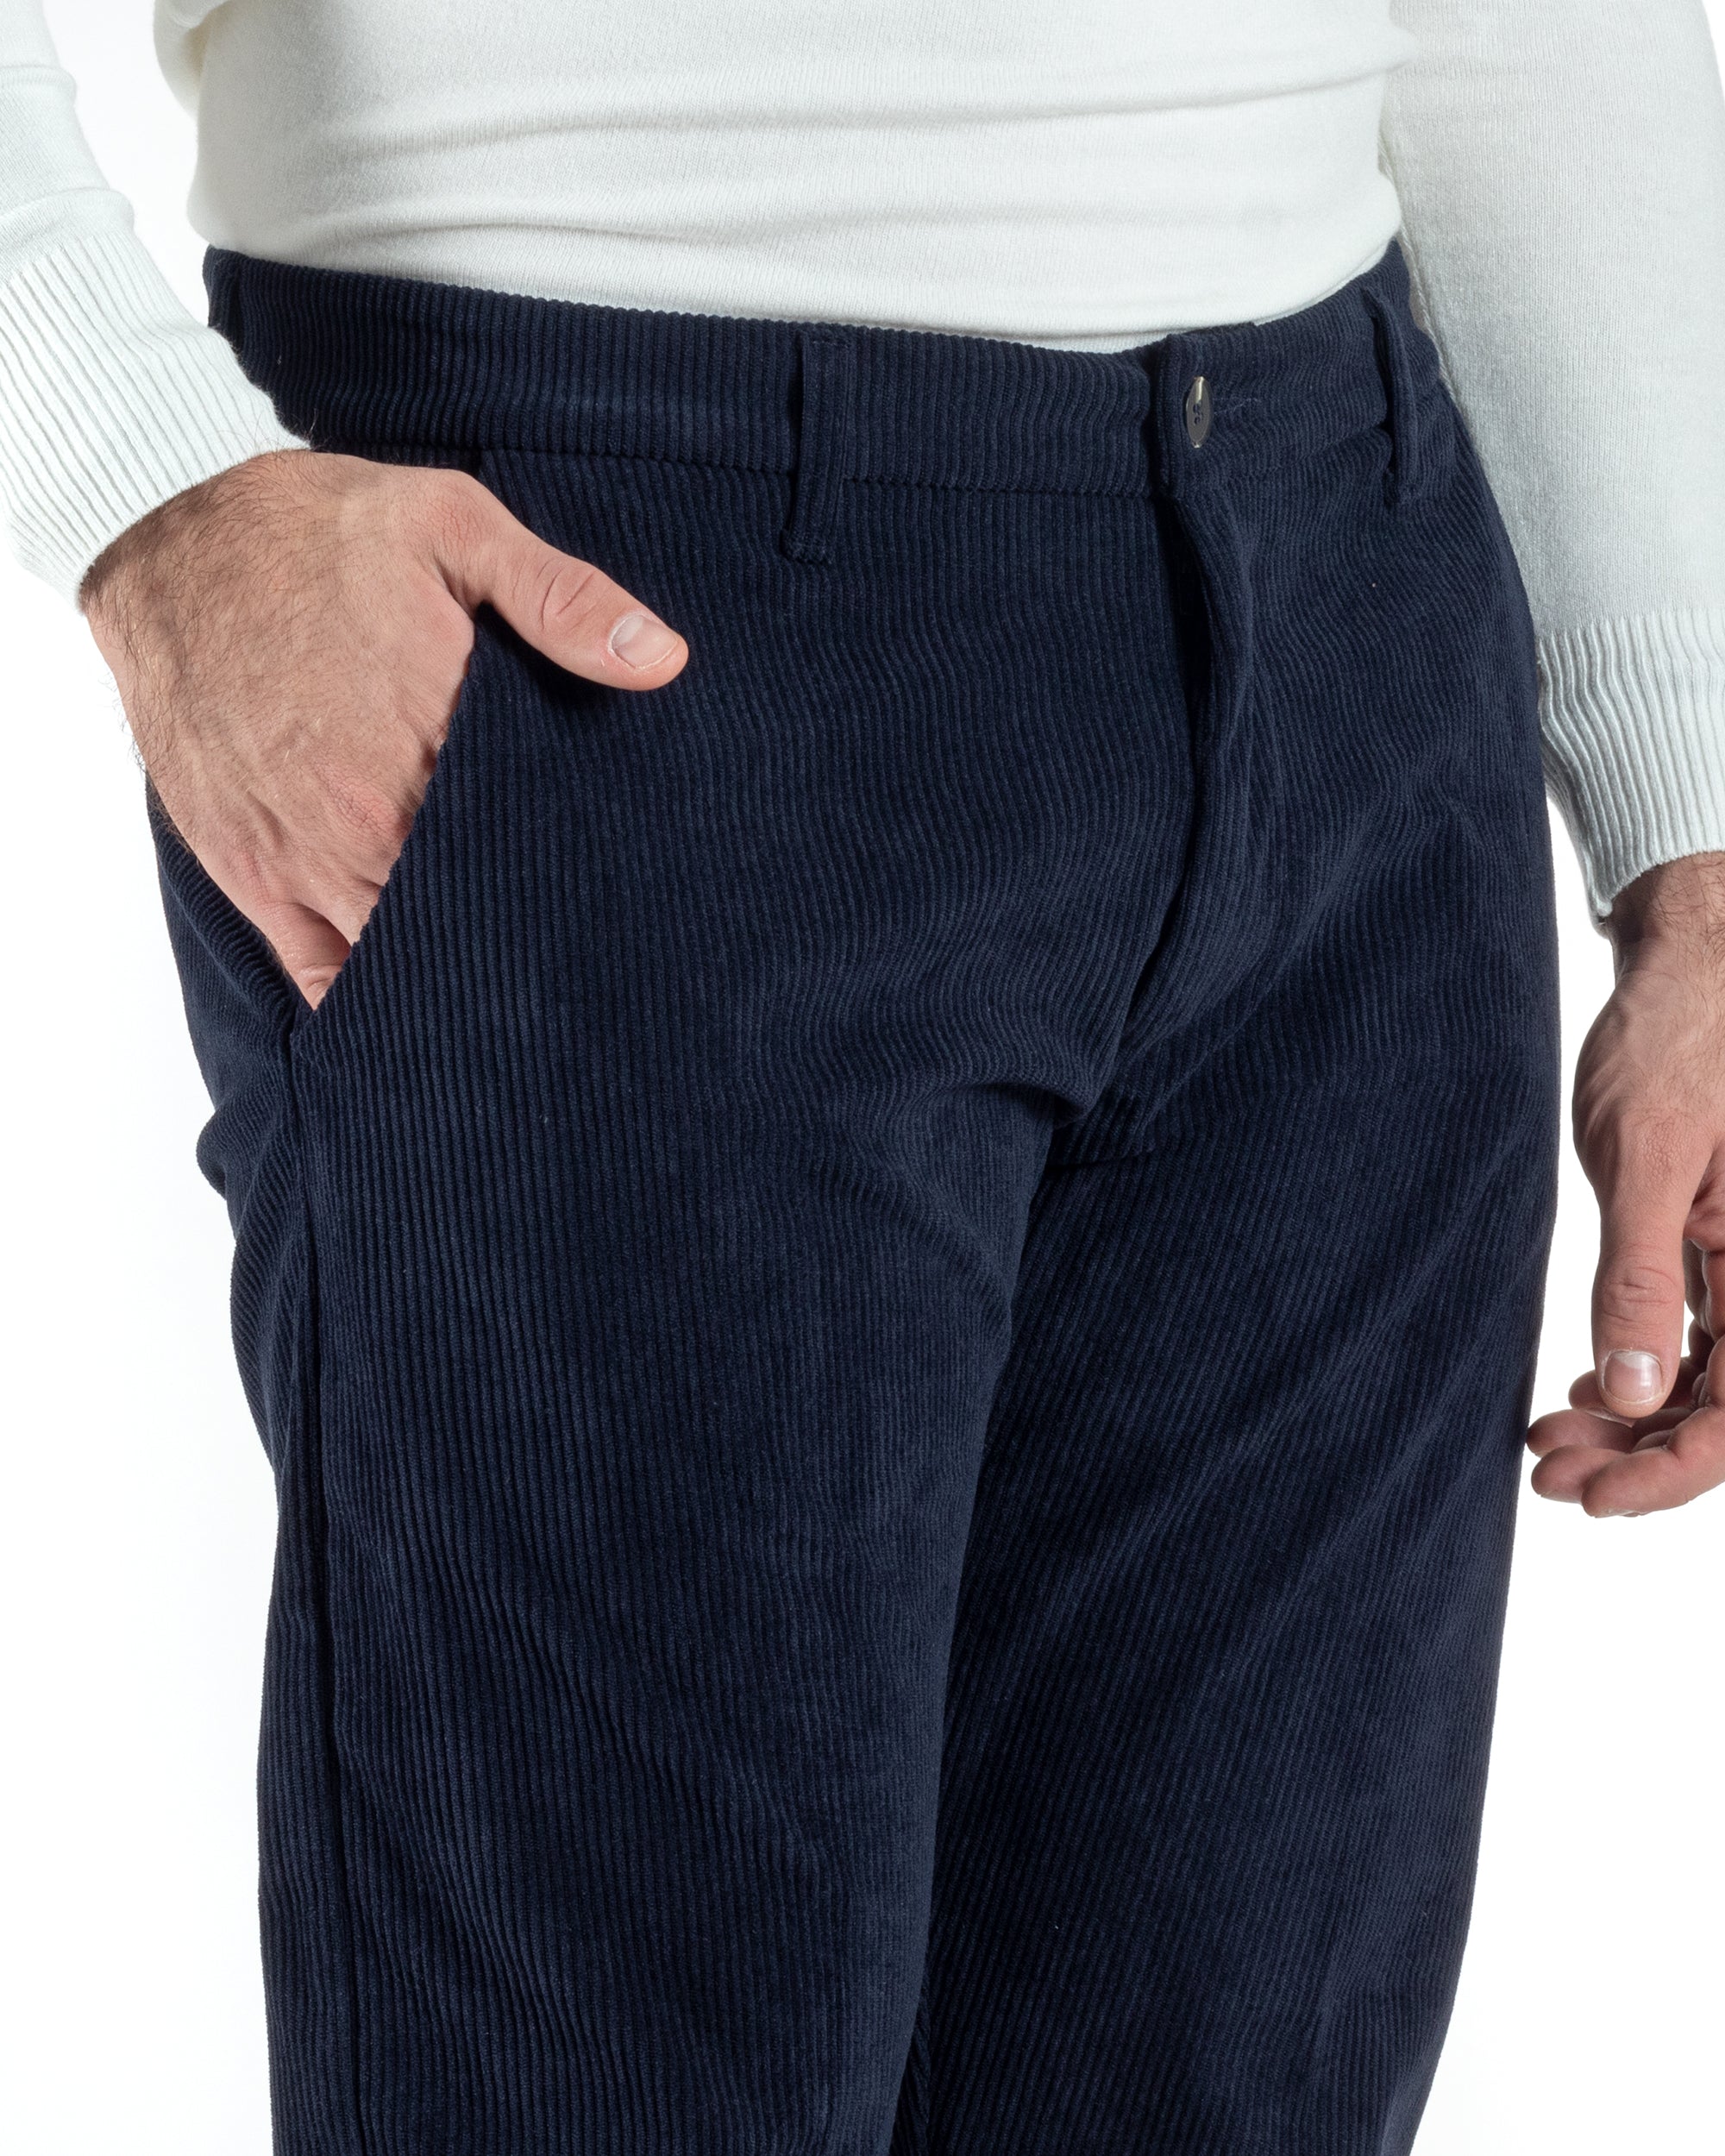 Pantaloni Uomo Tasca America Classico Velluto Costine Blu Casual GIOSAL-P6002A